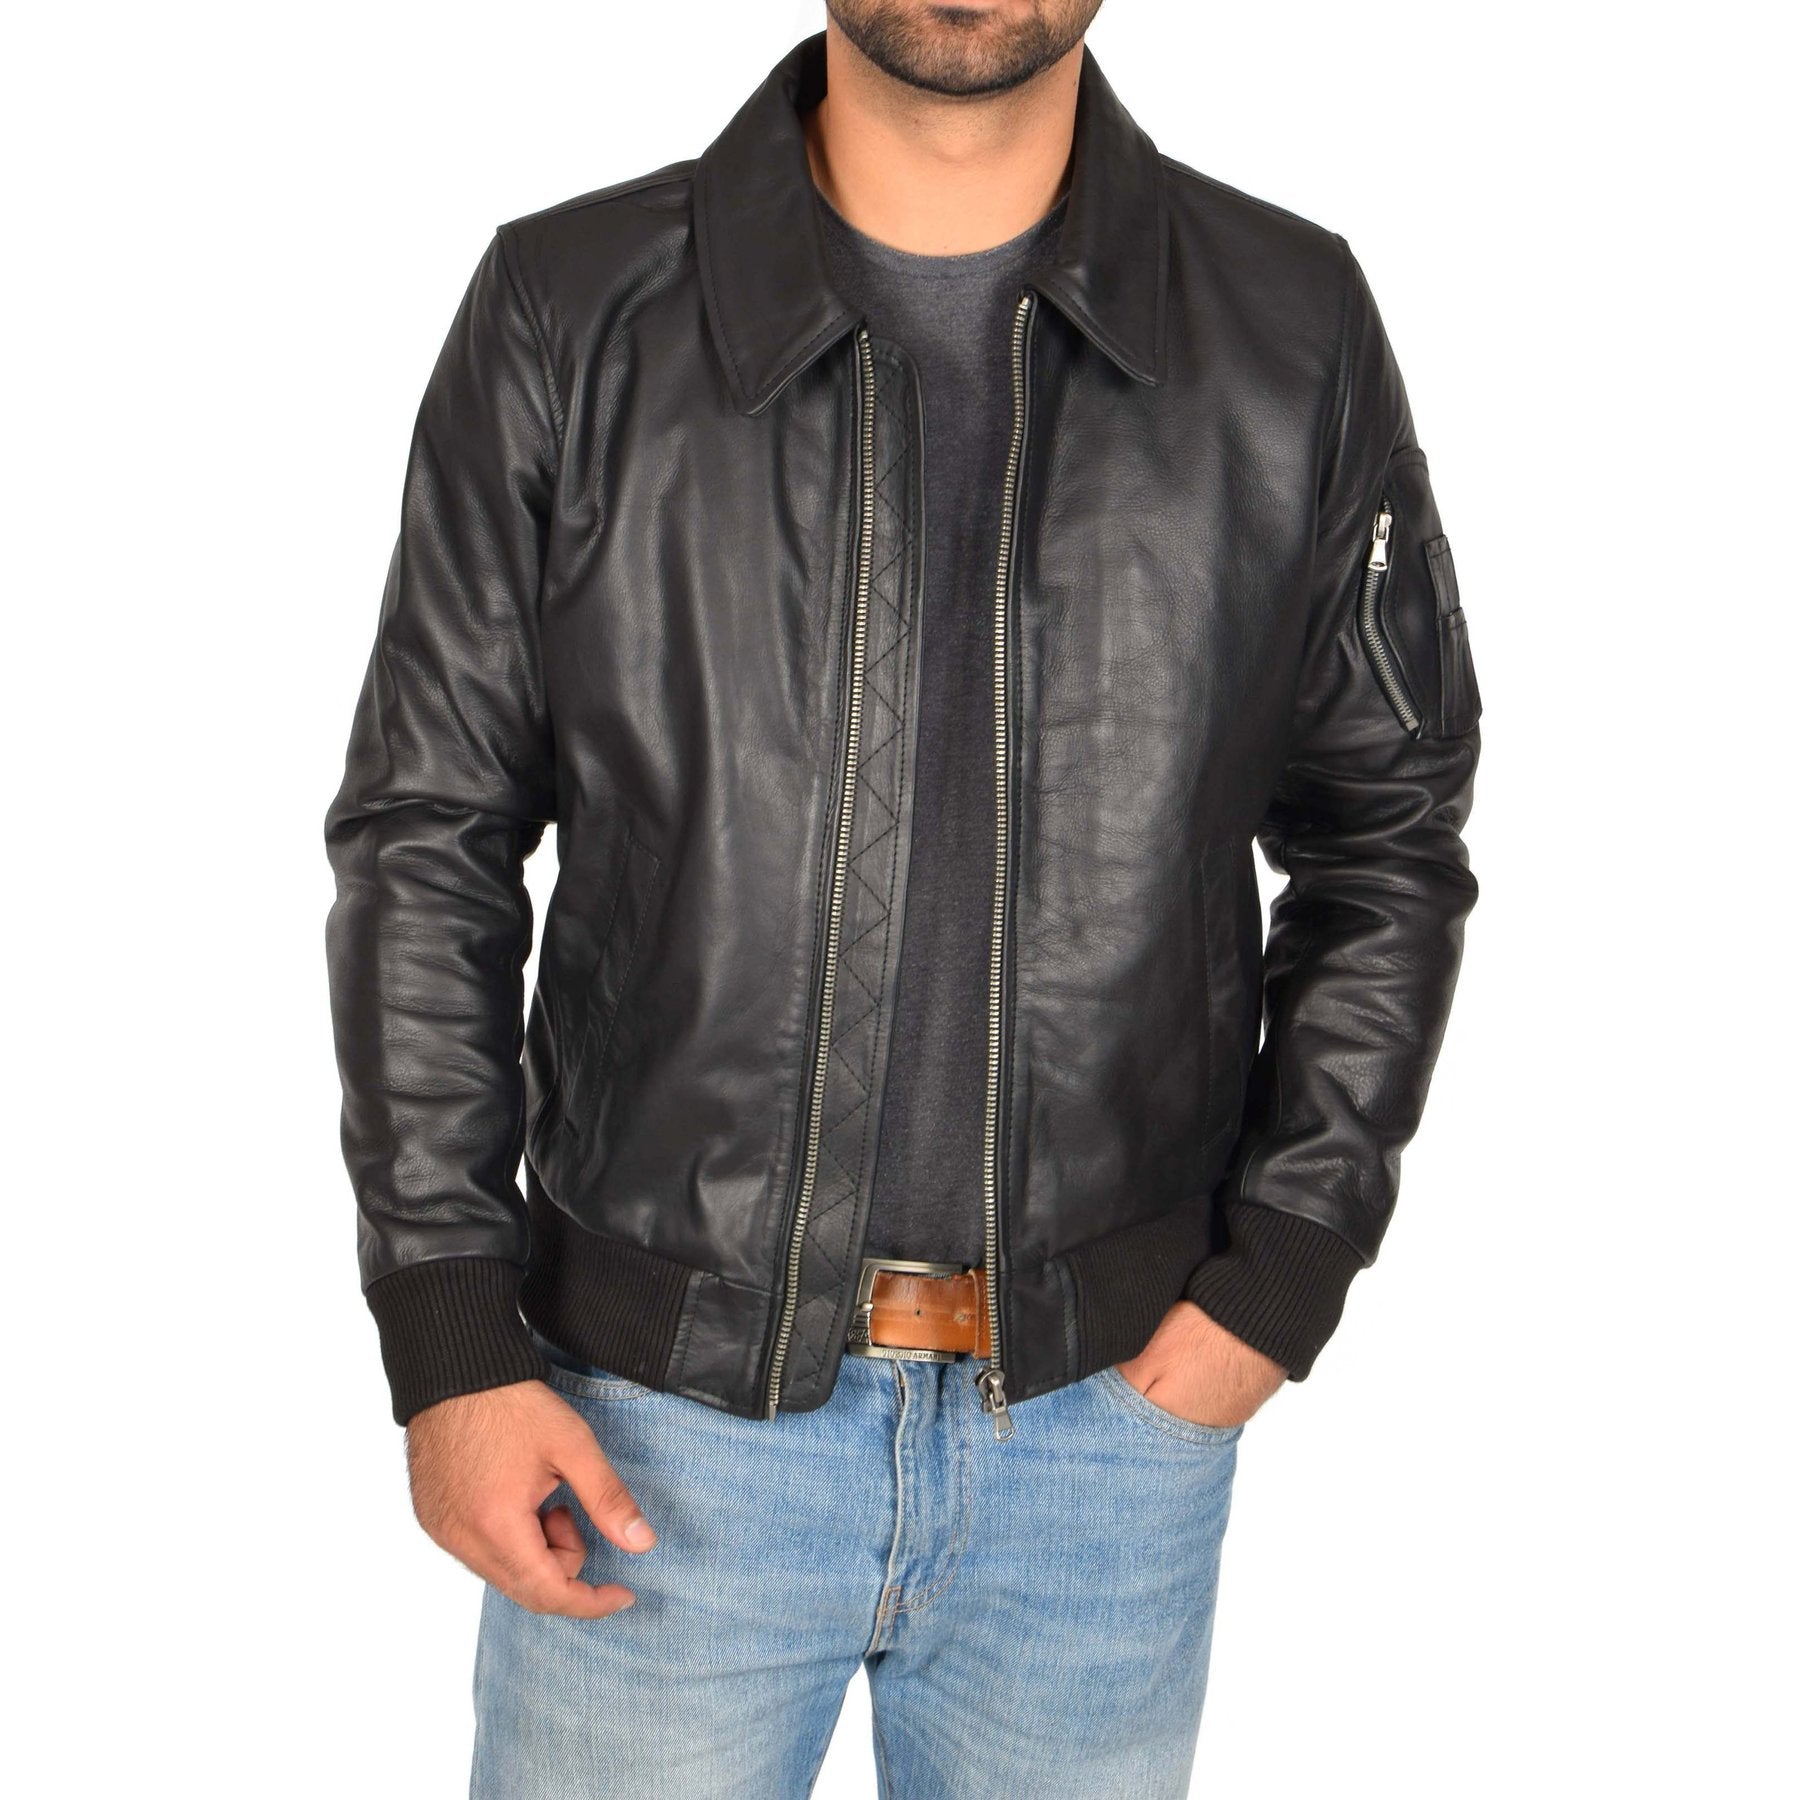 Spine Spark Men's Black Bomber Pilot Style Leather Jacket